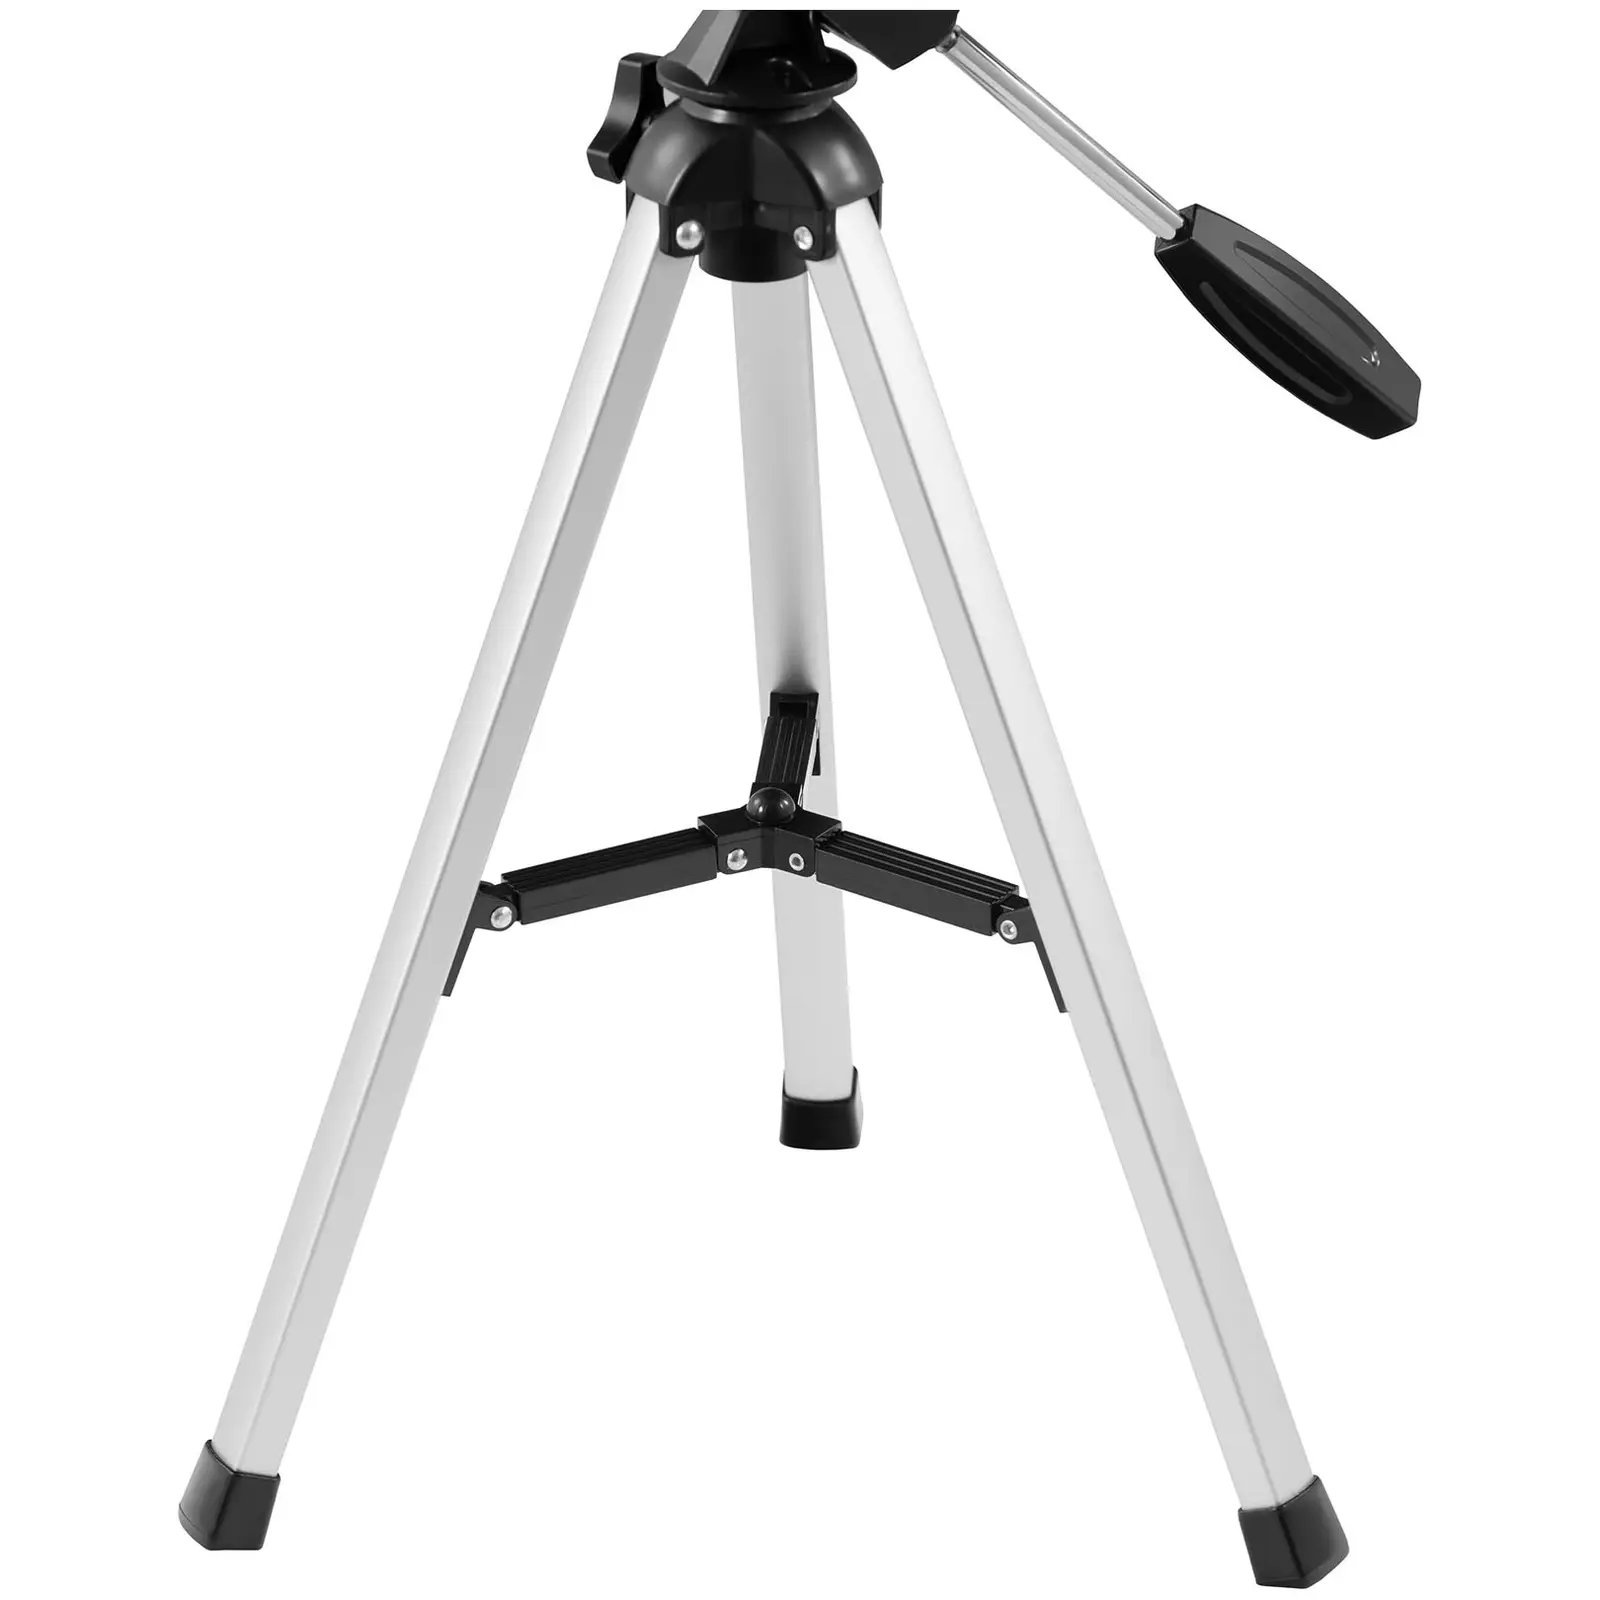 Teleskop - Ø 69,78 mm - 360 mm - Stativ